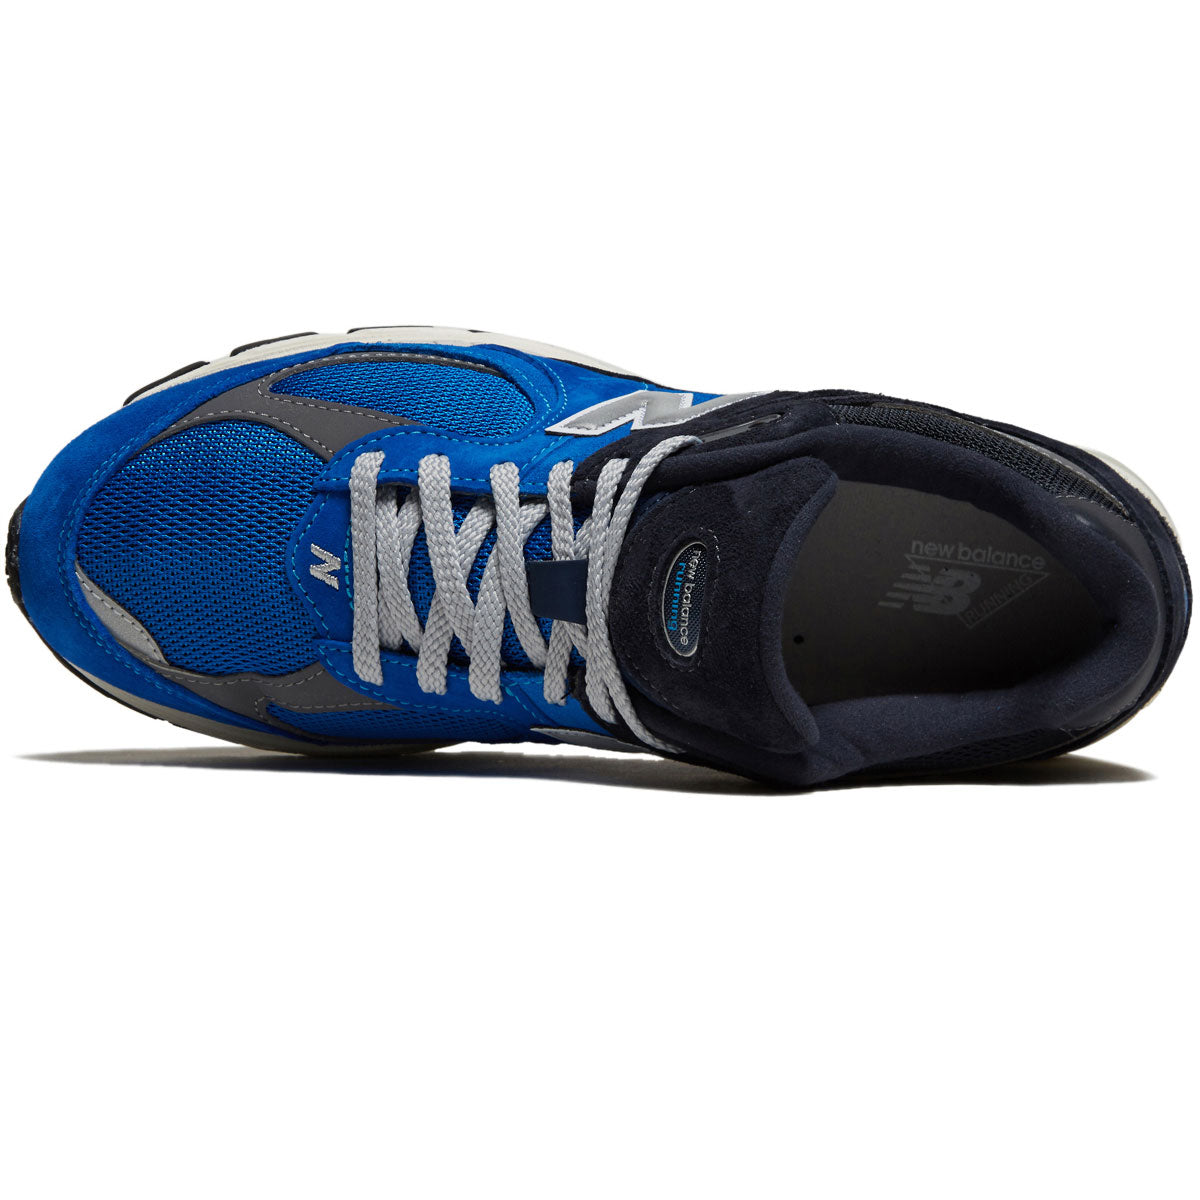 New Balance 2002R Shoes - Blue Oasis image 3